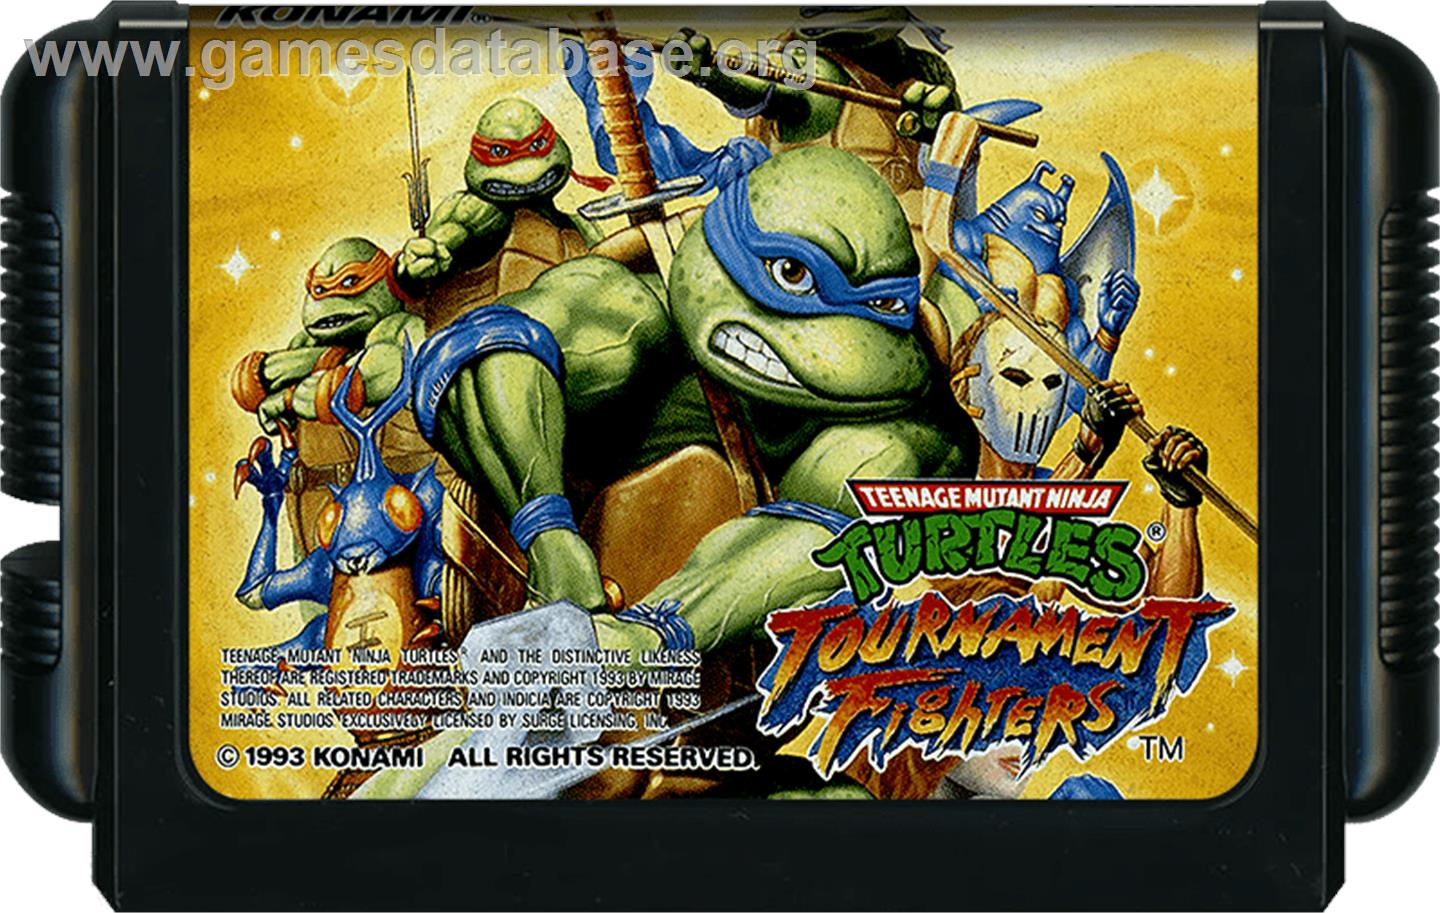 Teenage Mutant Ninja Turtles: Tournament Fighters - Sega Genesis - Artwork - Cartridge